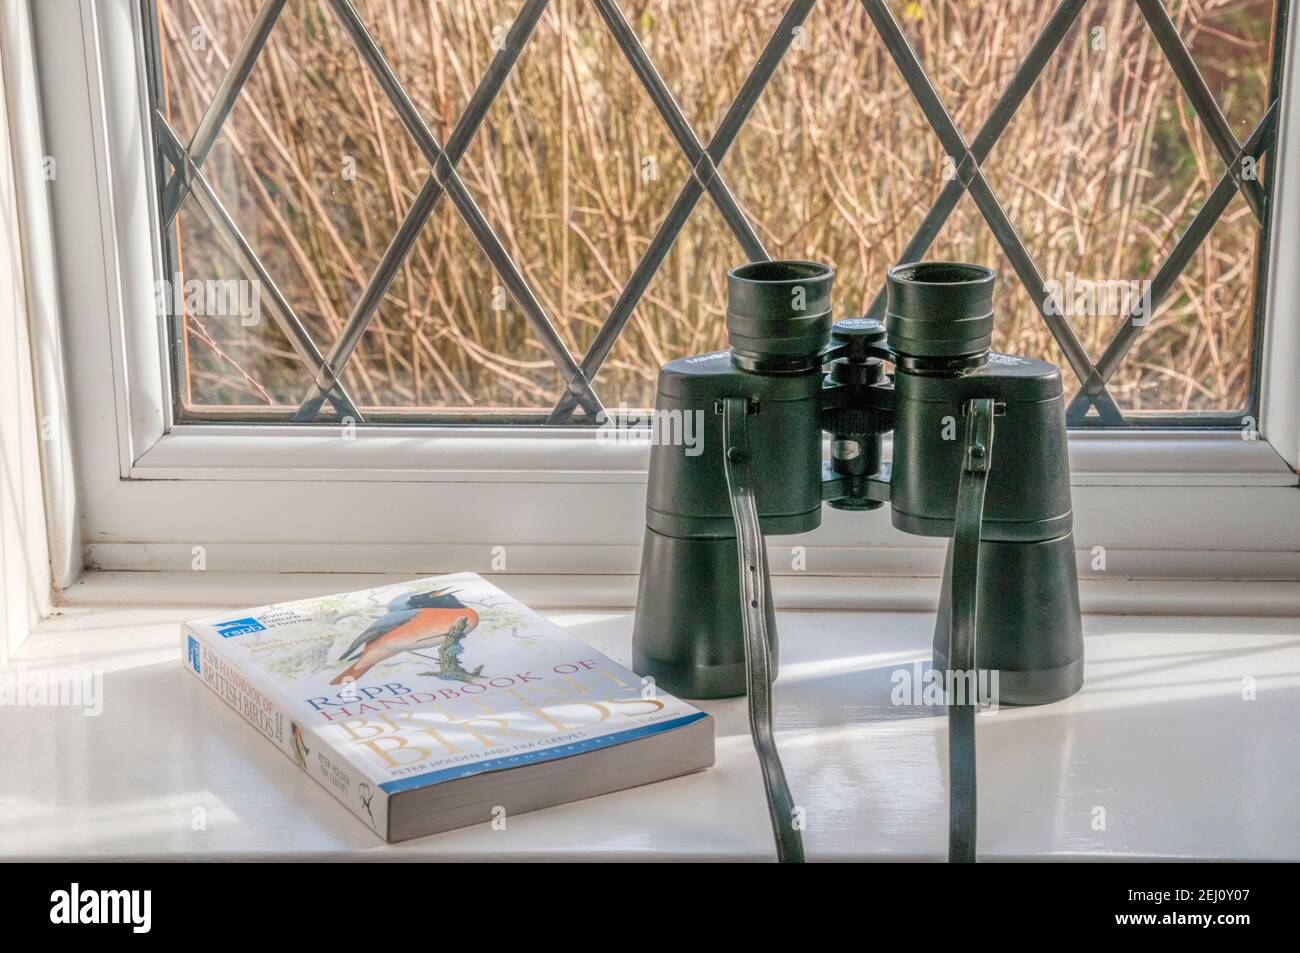 Binoculars & bird recognition guide ready for bird watching from the garden window. Stock Photo